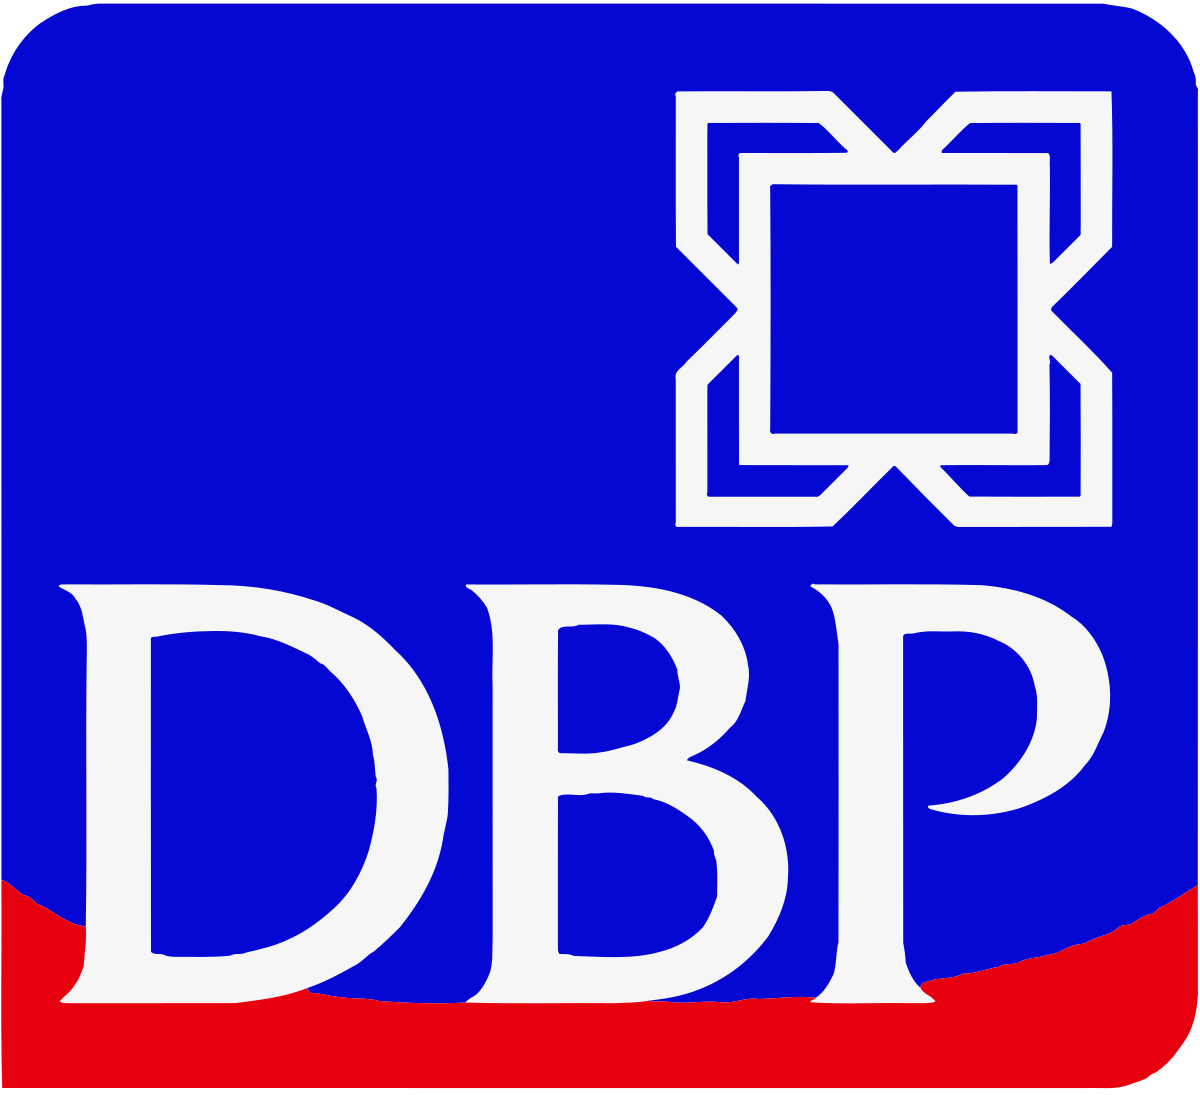 Development Bank of the Philippines